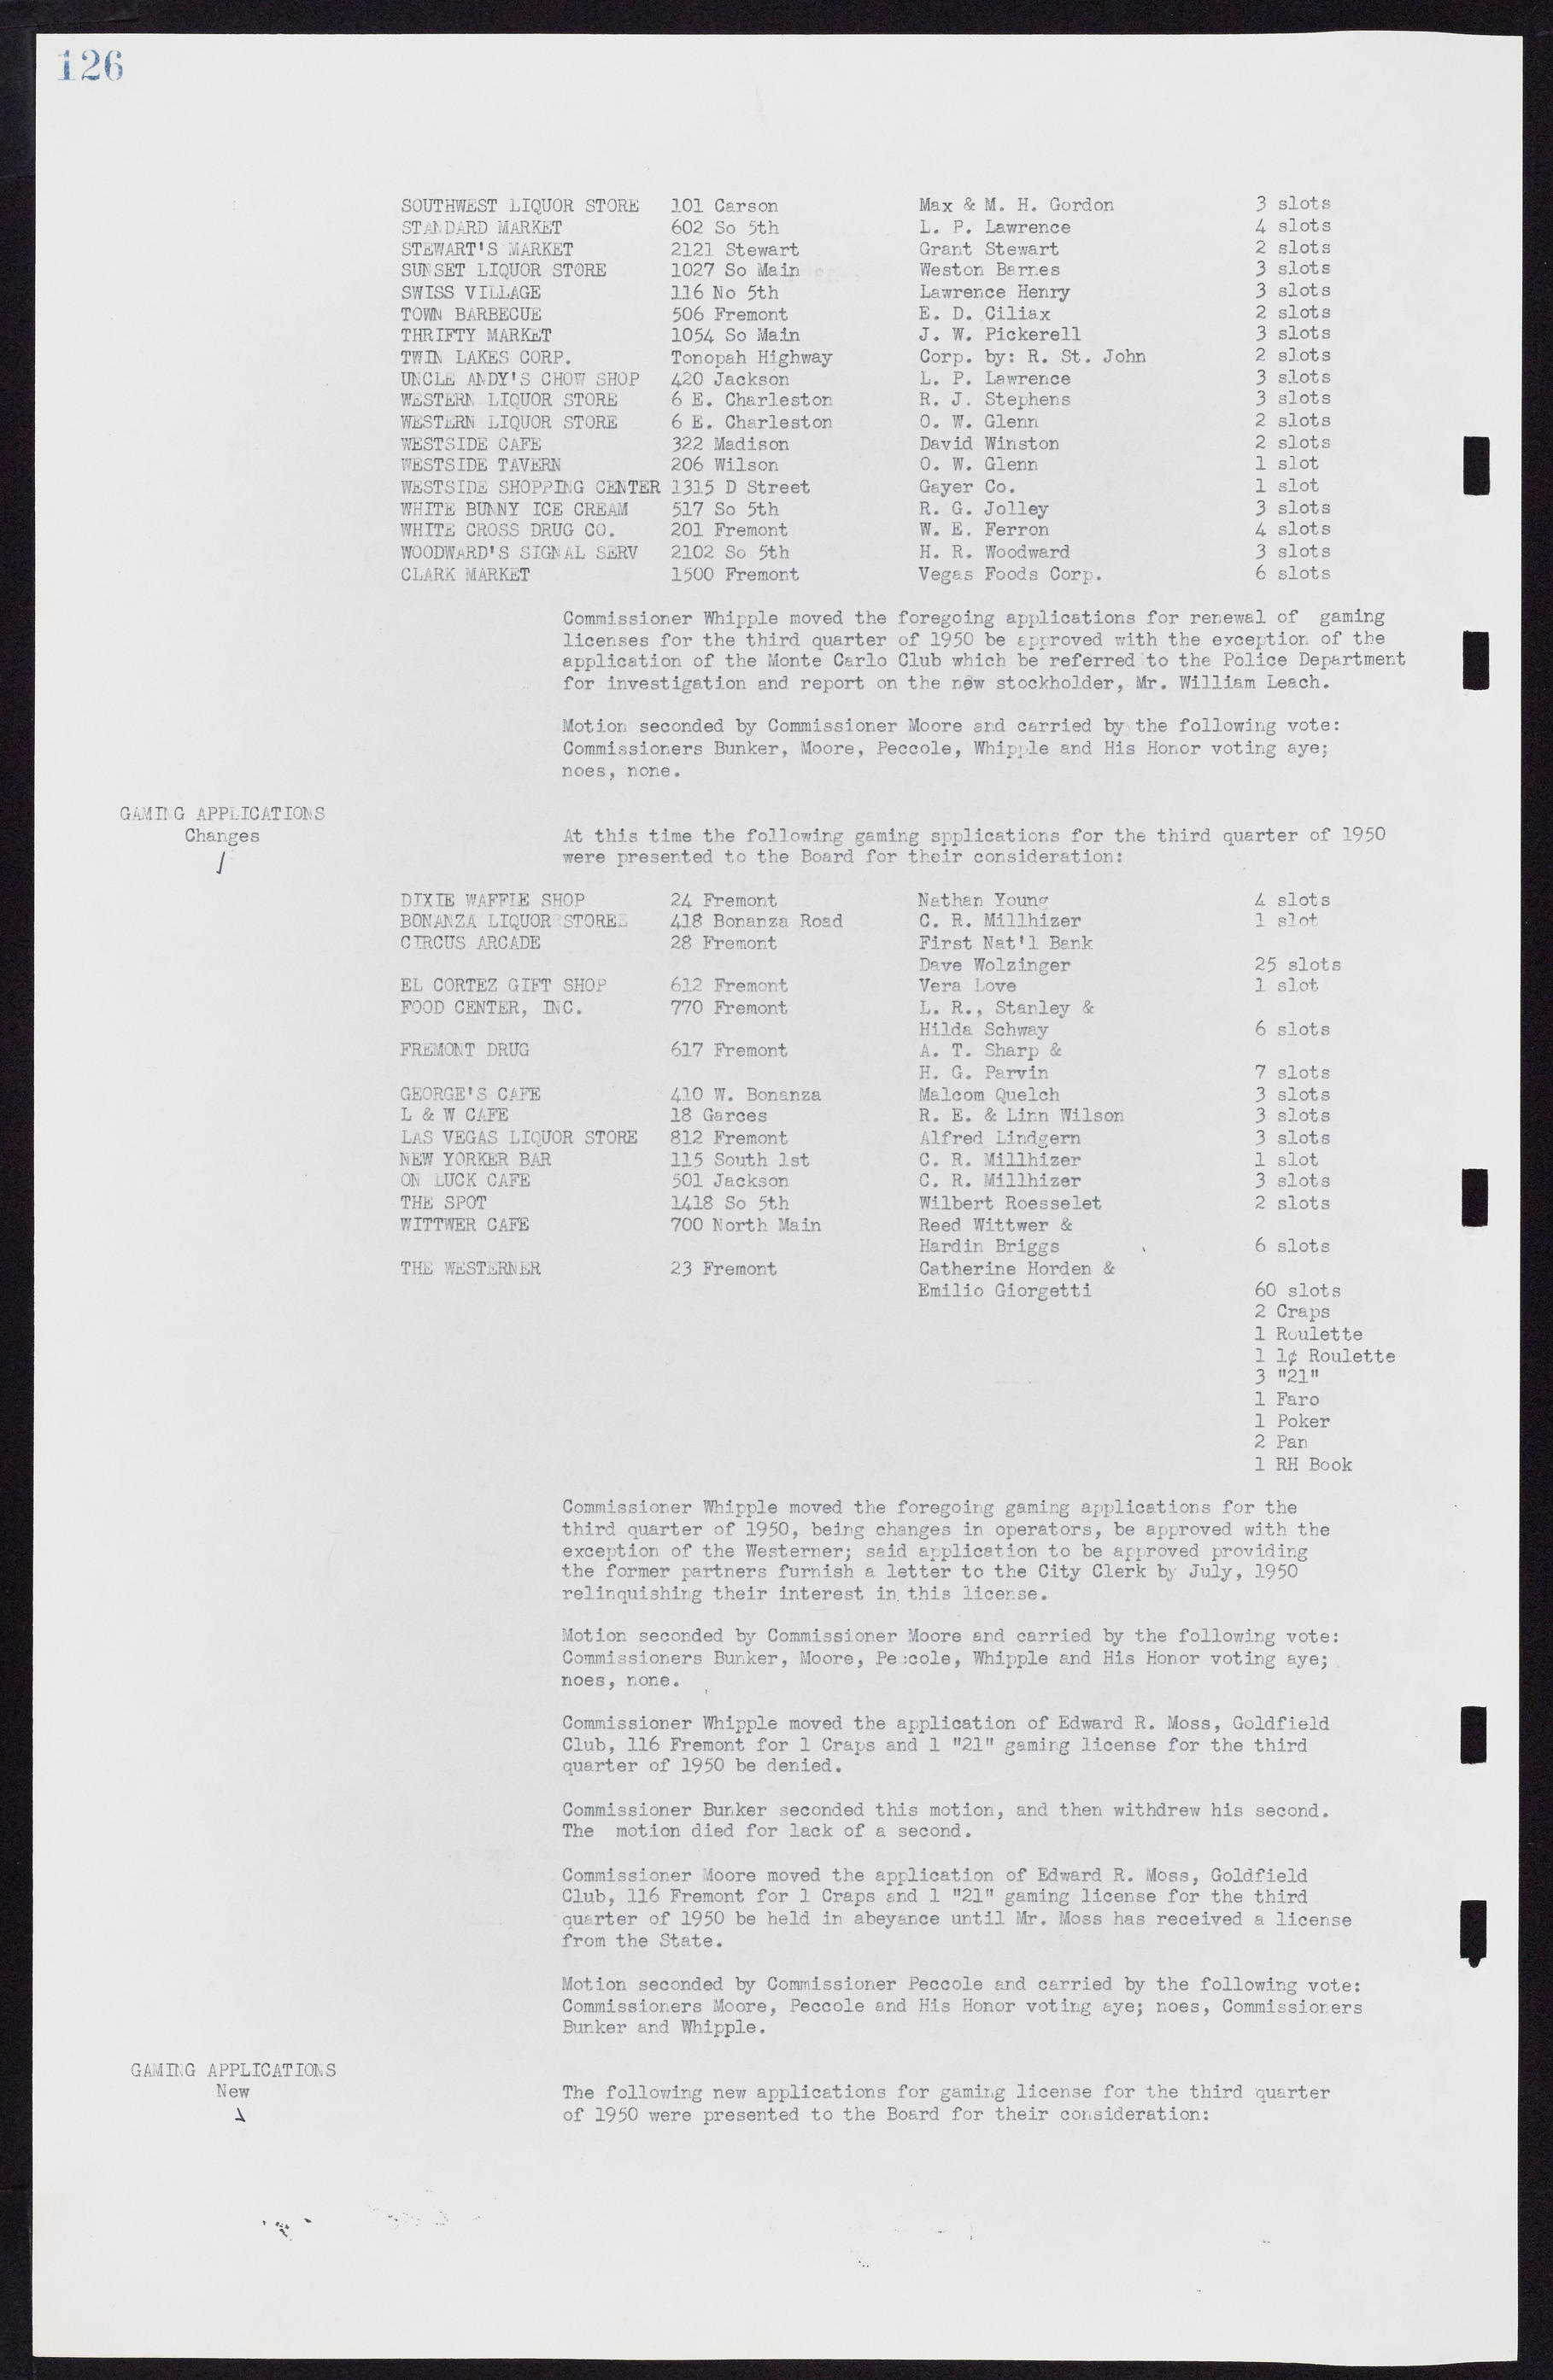 Las Vegas City Commission Minutes, November 7, 1949 to May 21, 1952, lvc000007-134